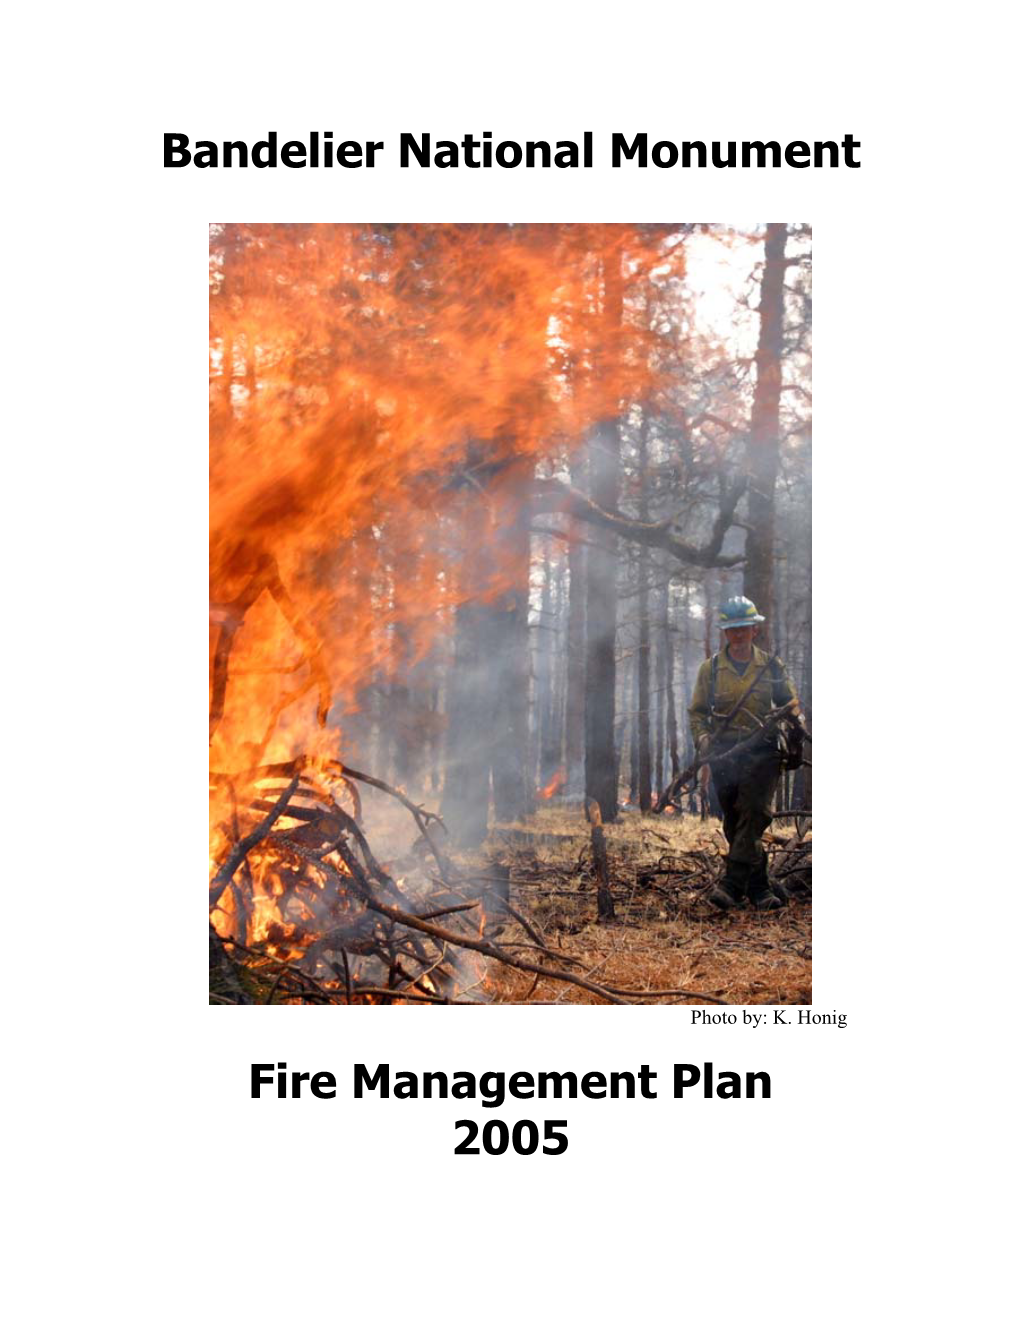 Bandelier National Monument Fire Management Plan 2005